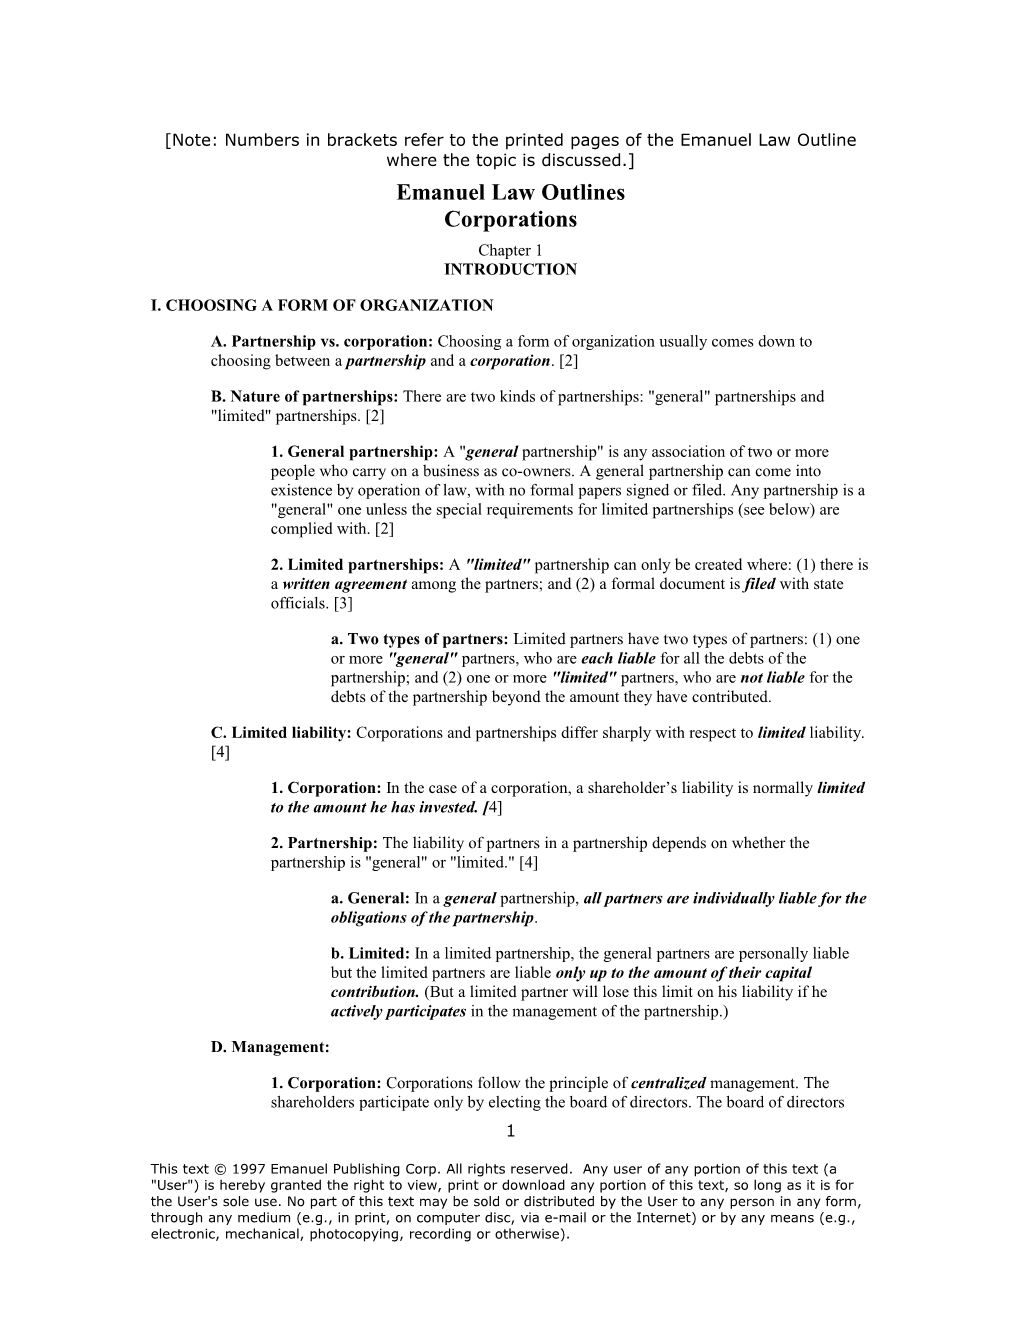 Emanuel Law Outlines Corporations